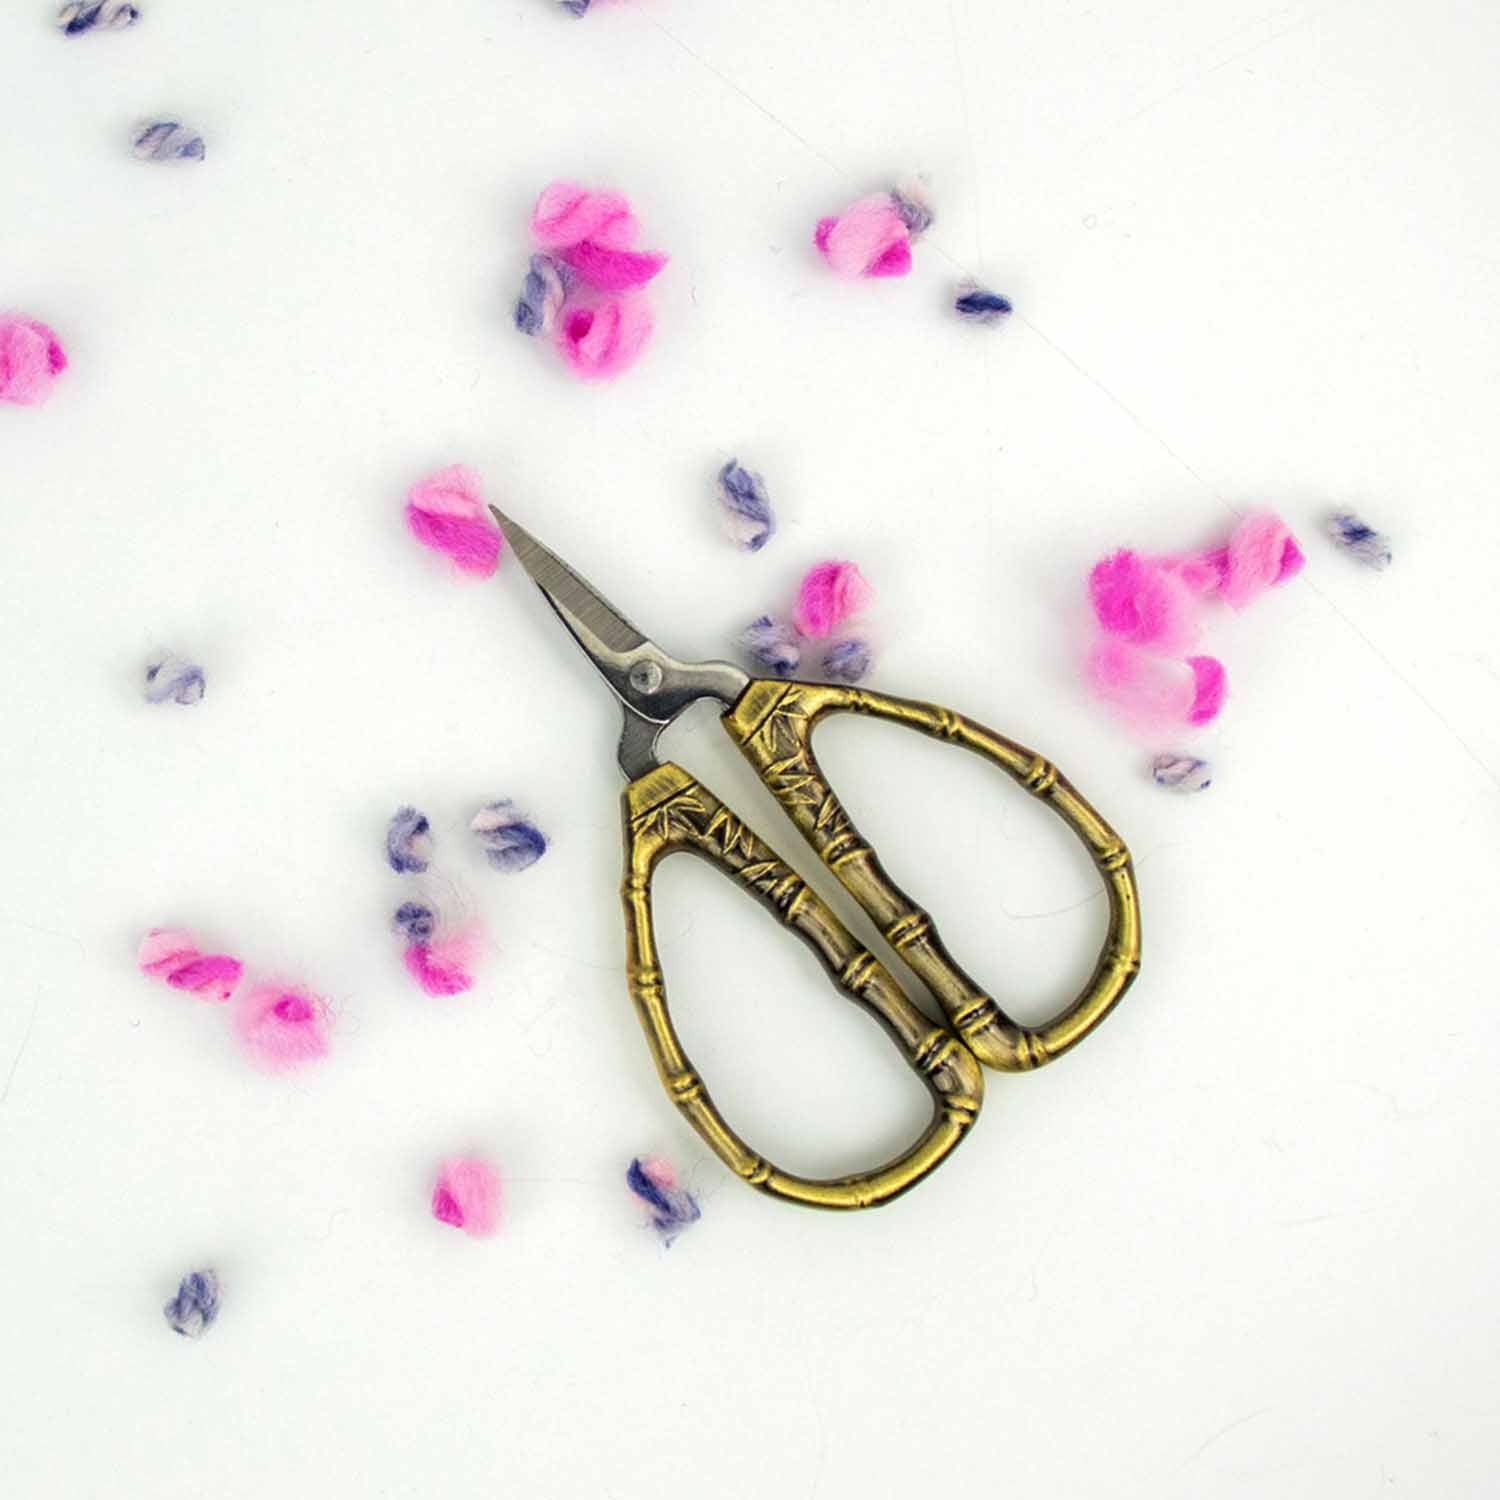 Thread Snips - Bronze Bamboo Tiny Scissors